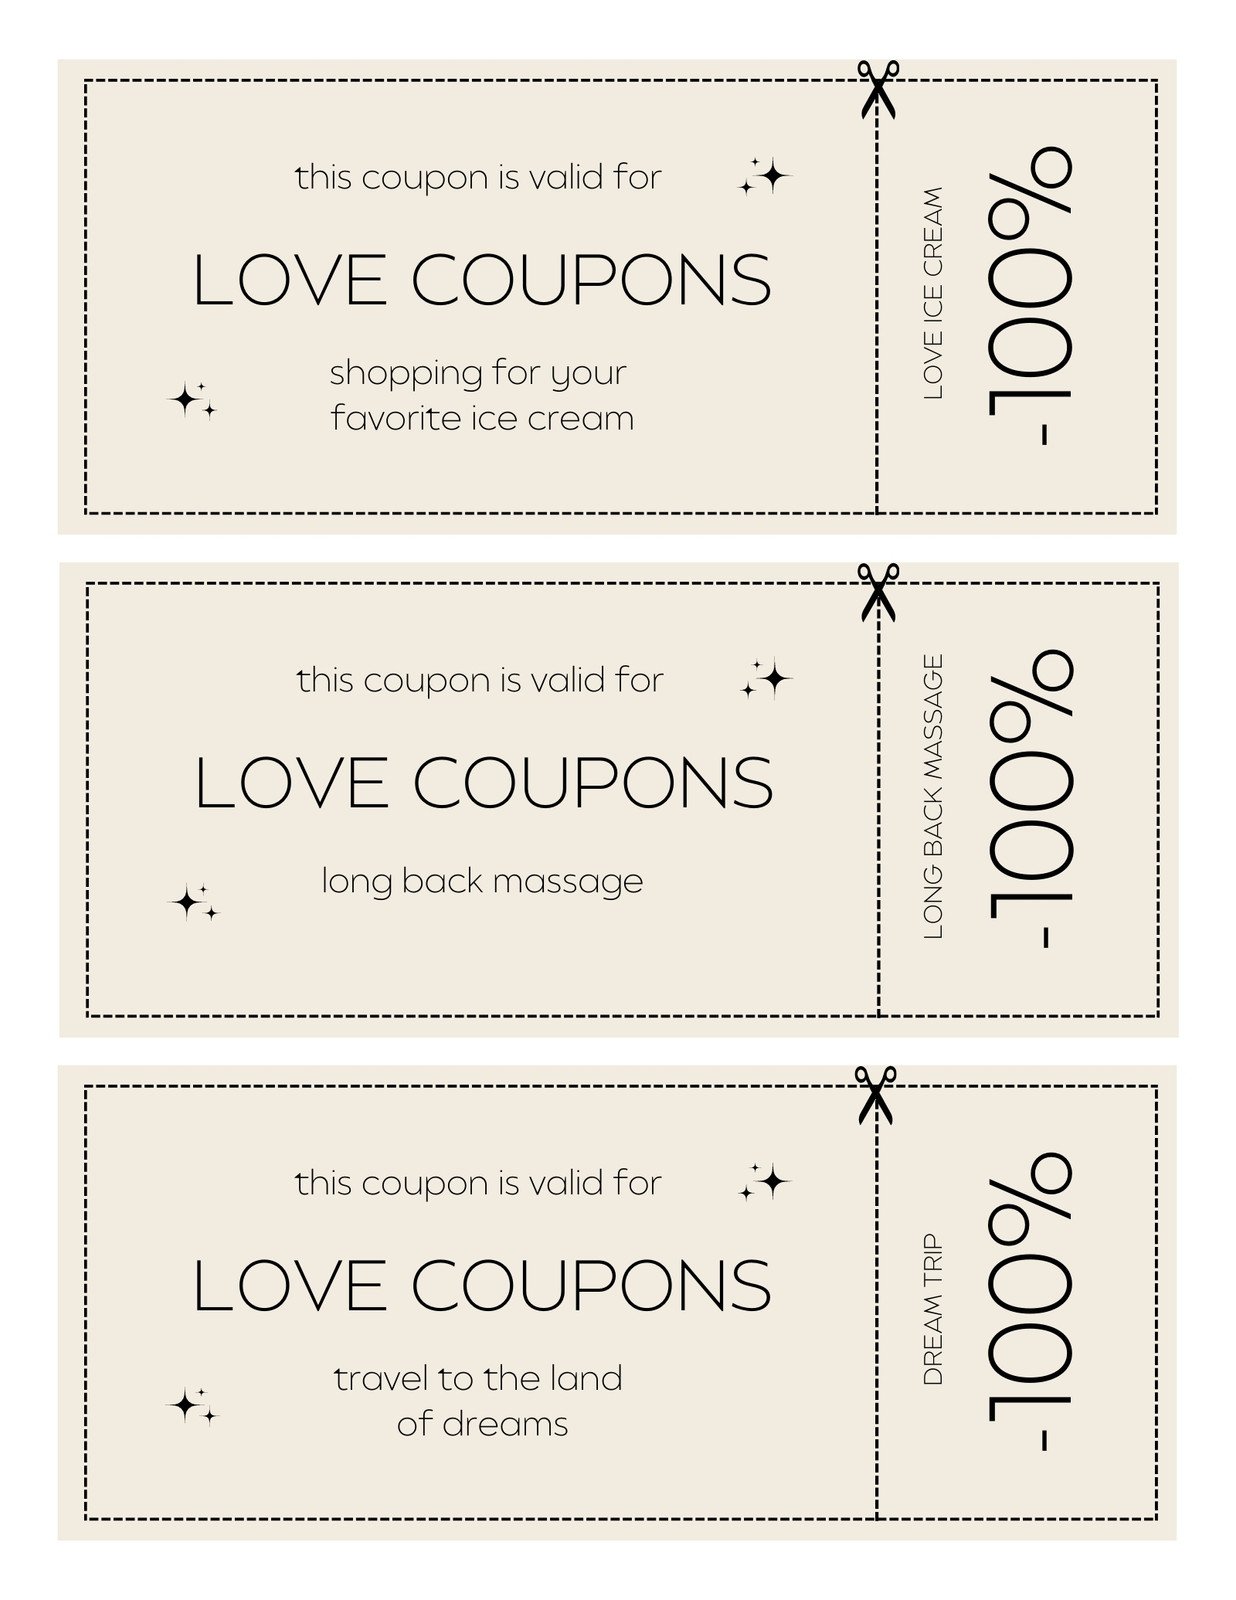 Sample program coupons